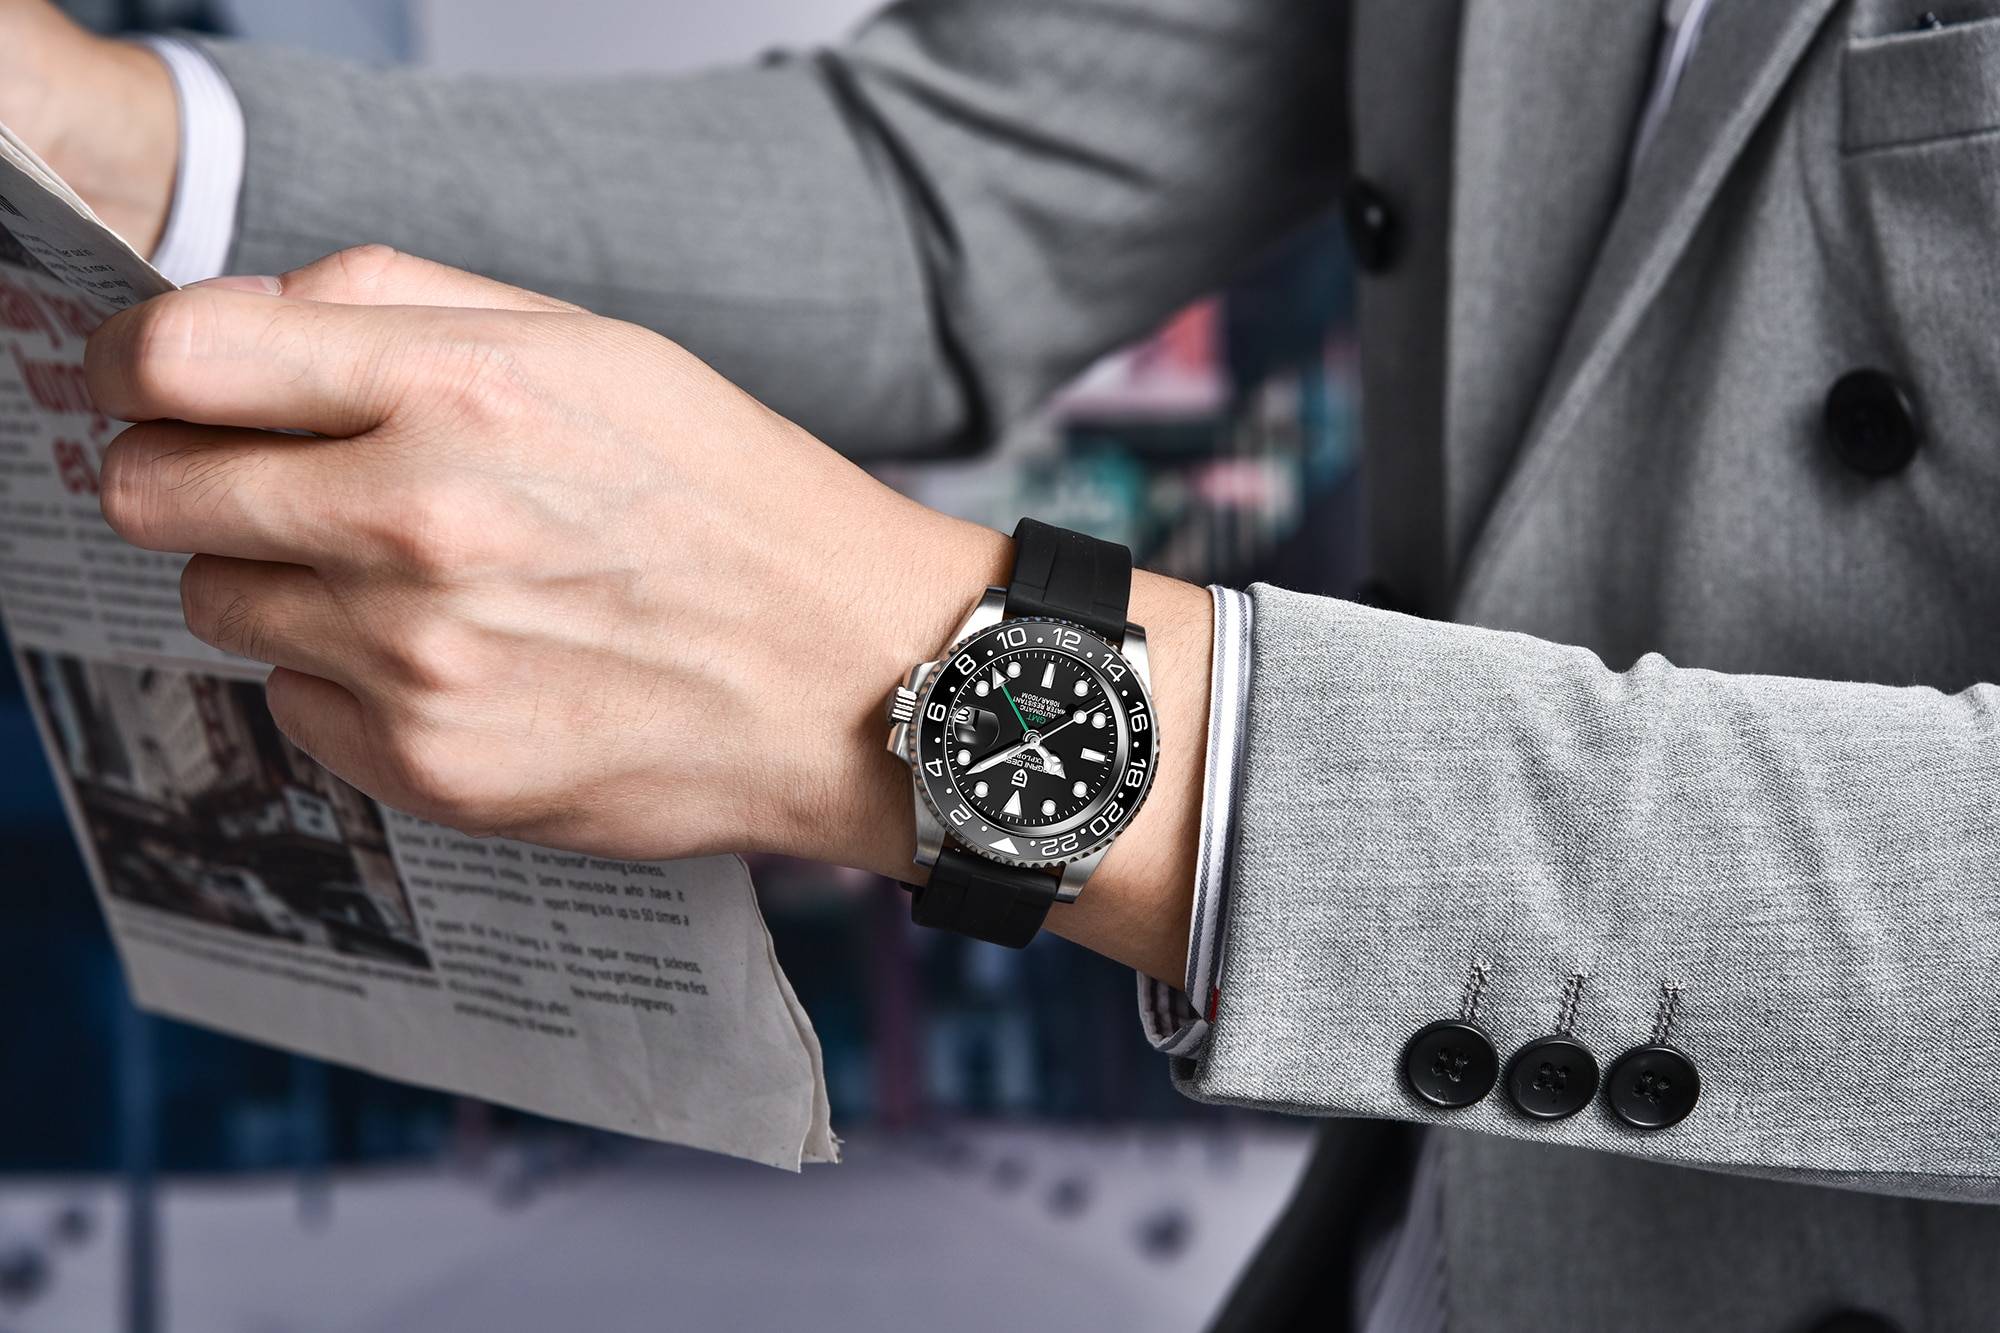 PAGANI DESIGN 2020 Luxury Men Mechanical Wristwatch Stainless Steel GMT Watch Top Brand Sapphire Glass Men Watches reloj hombre